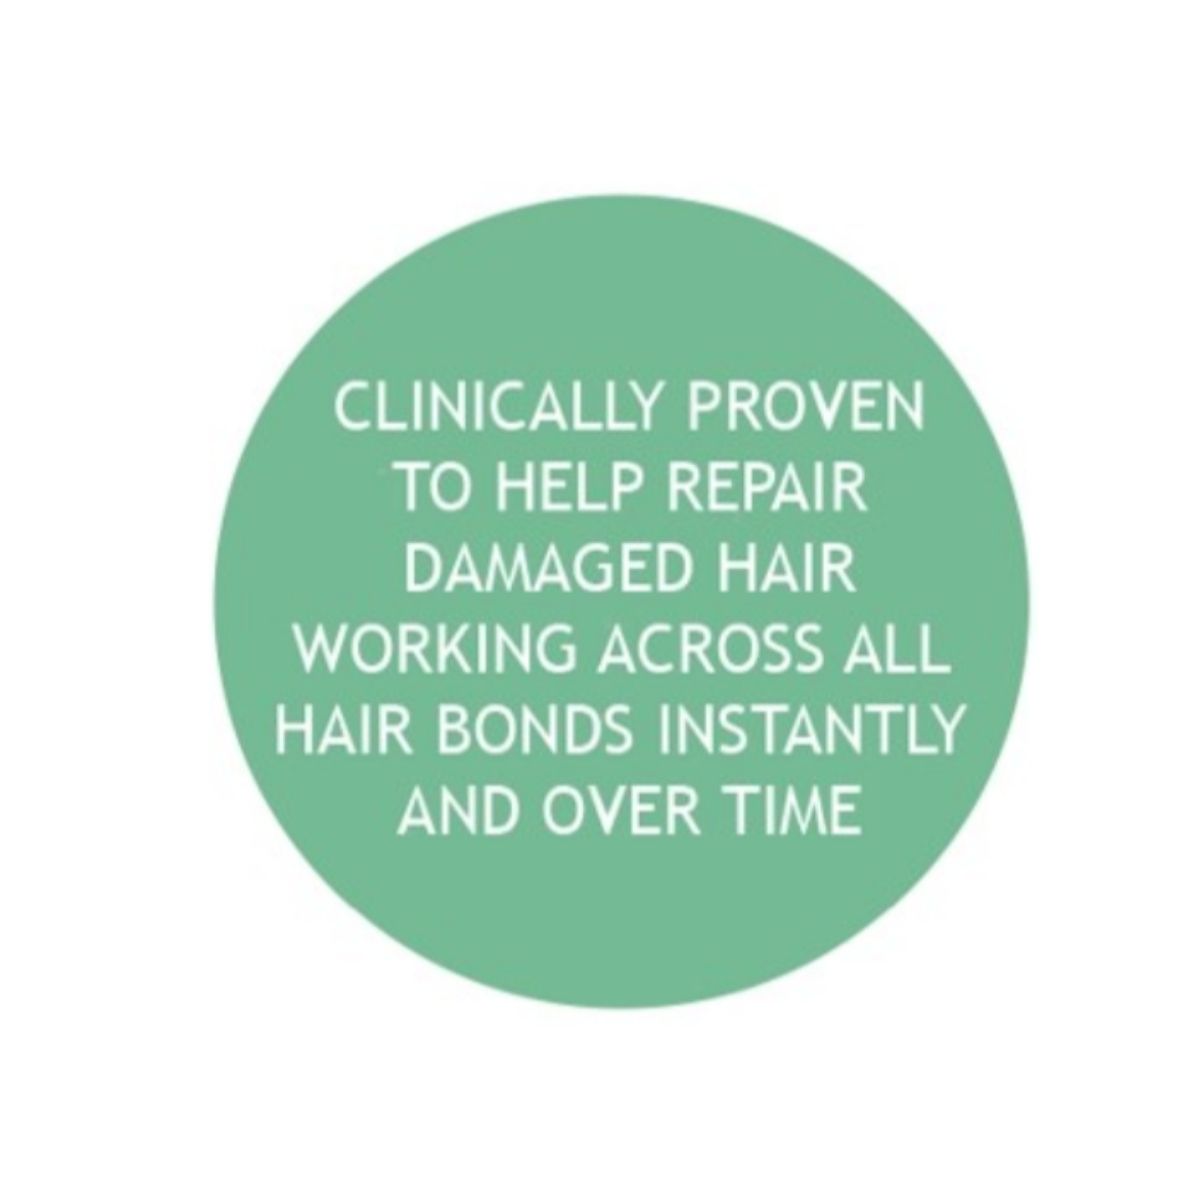 The Inkey List PCA Bond Repair Hair Treatment